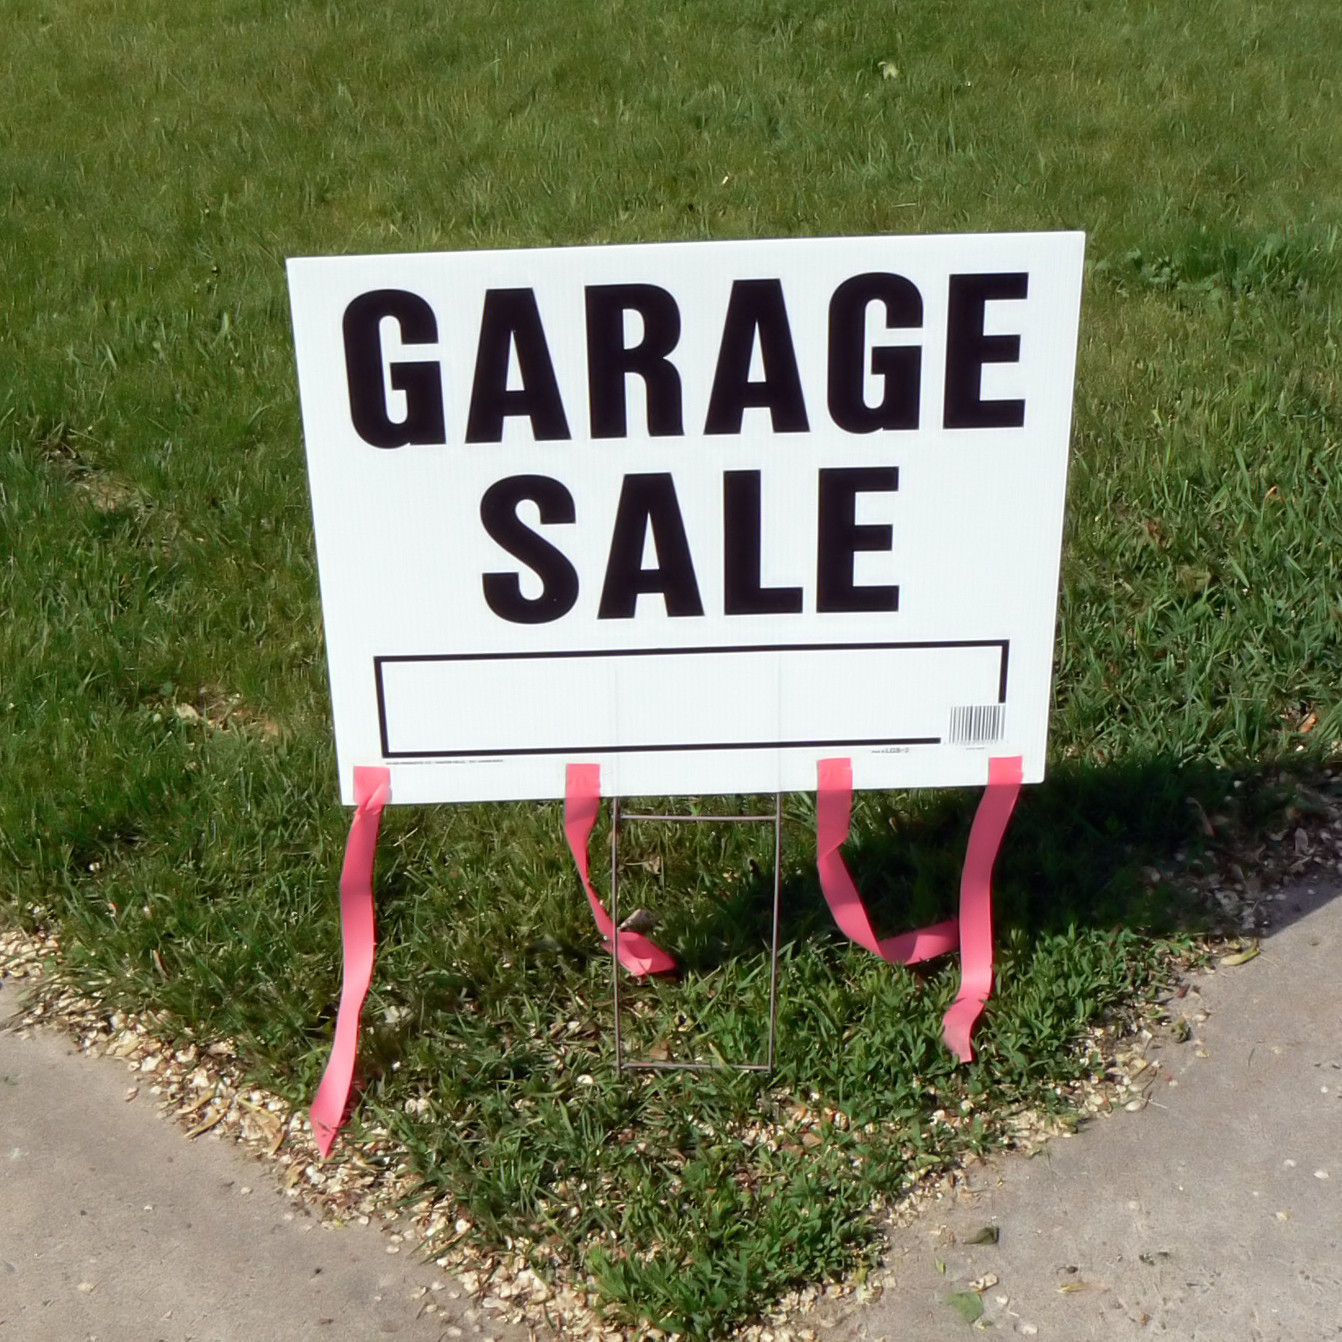 Гараж распродаж юмор. Garage sale. Sales humor.